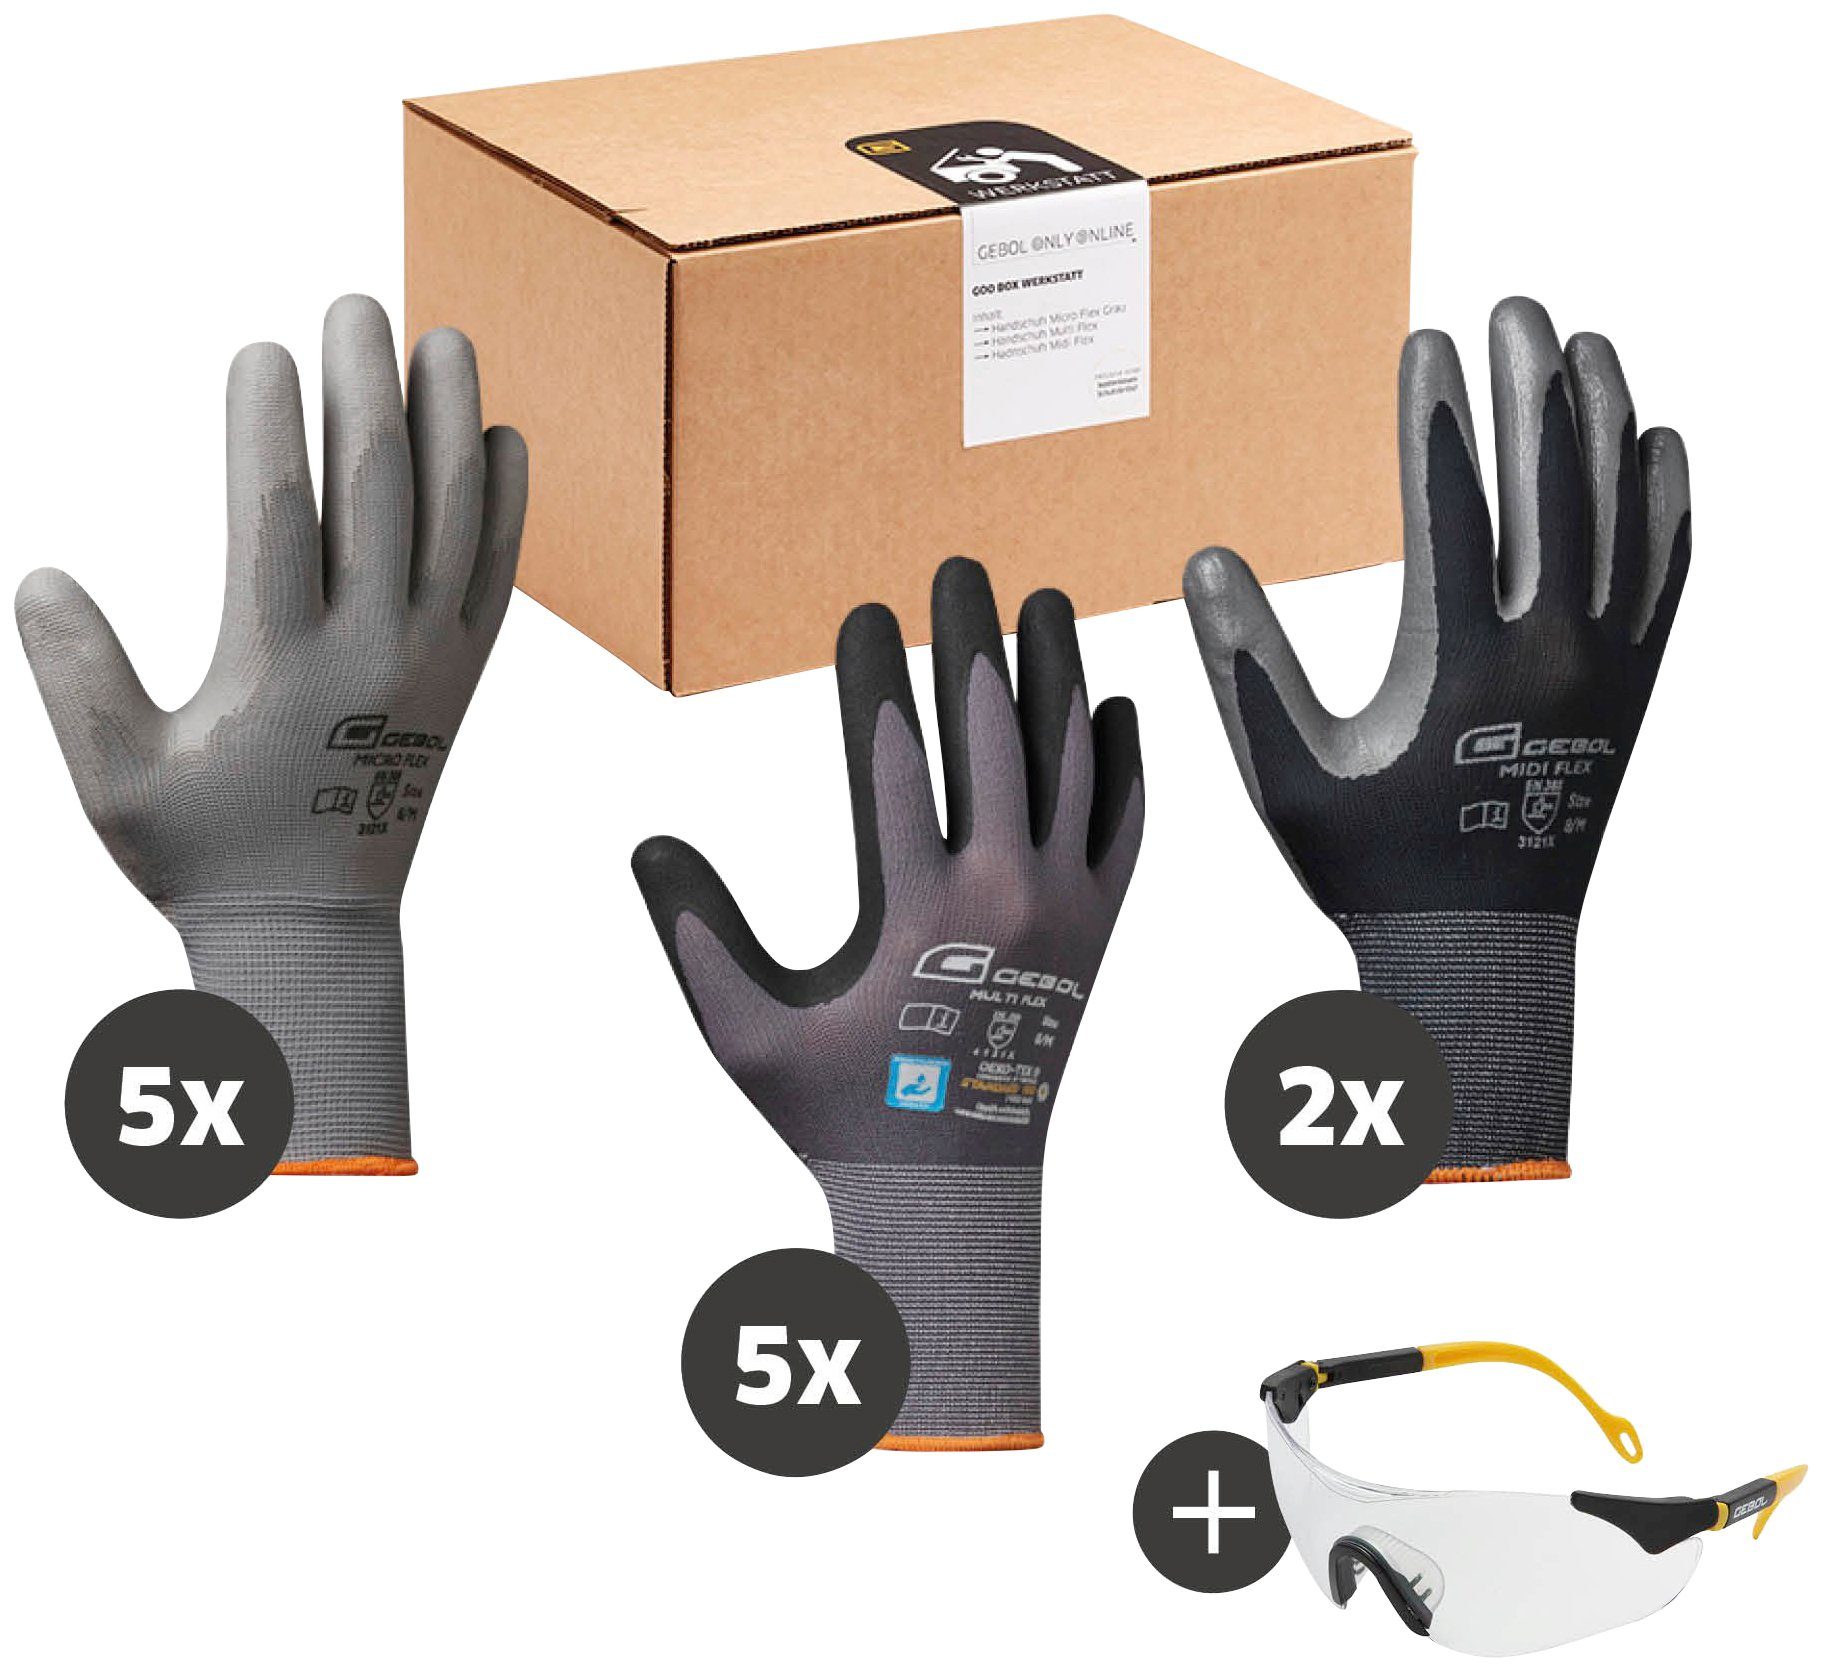 Gebol Arbeitshandschuh-Set Werkstatt 12 Paar Handschuhe und 1 Schutzbrille | Arbeitshandschuhe